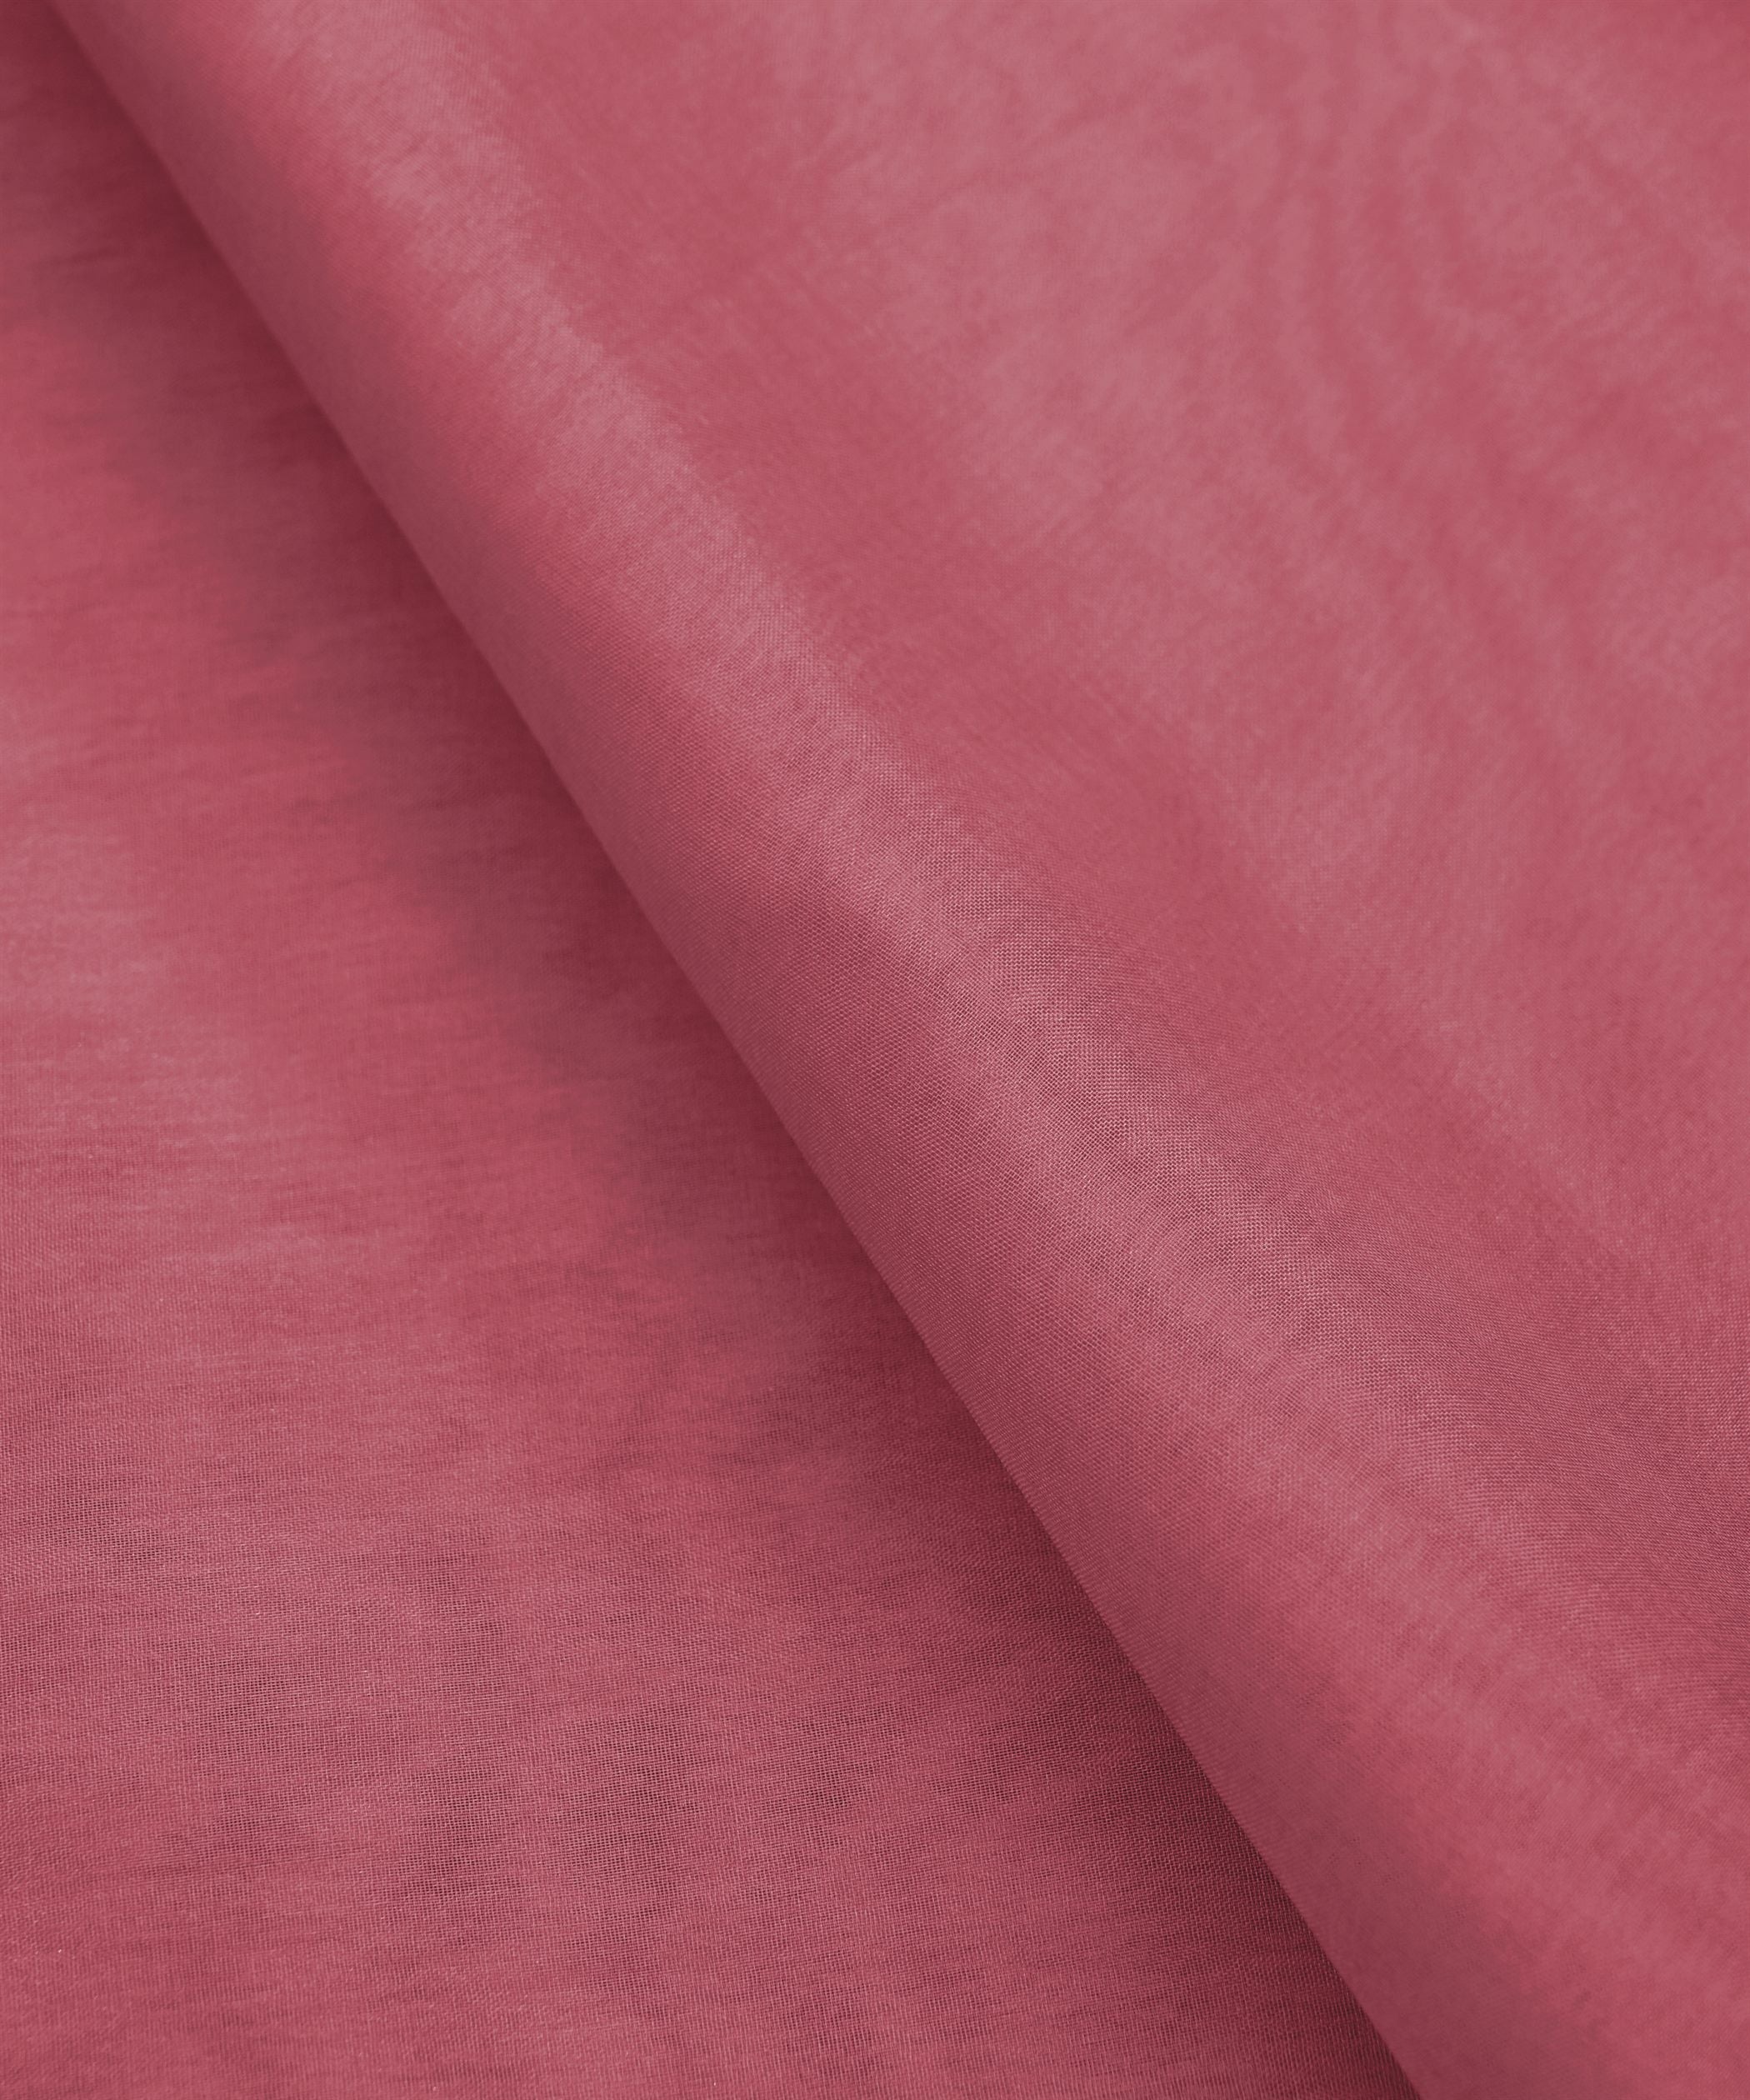 Wild Rose Pink Plain Dyed Organza Fabric